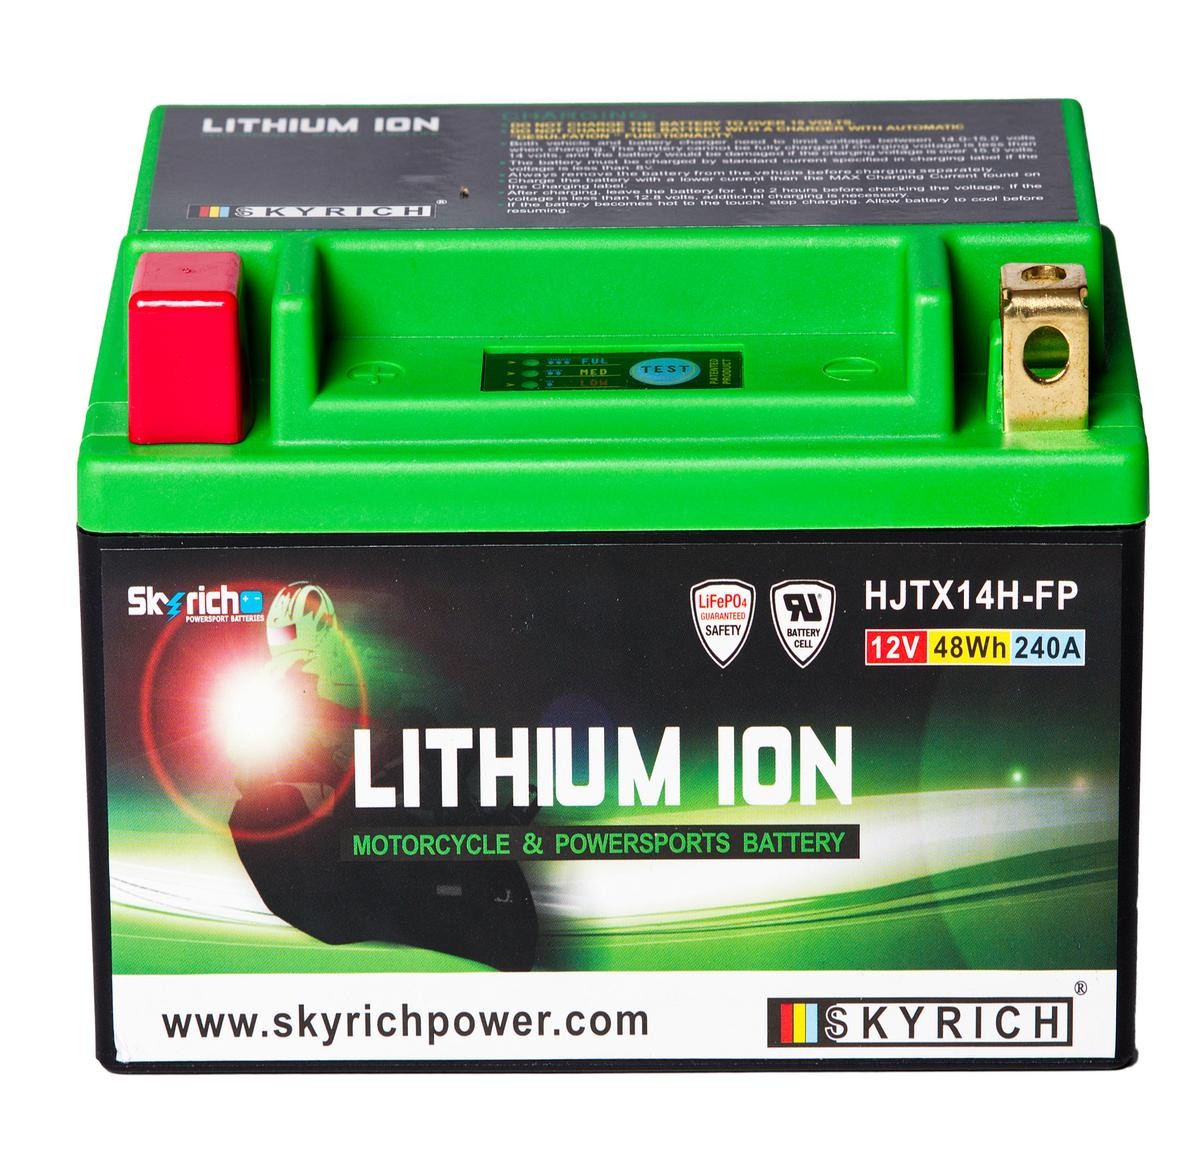 SKYRICH LITHIUM ION Batterie 12V 4Ah 240A N Li-Ionen-Batterie HJTX14H-FP KYMCO Mofa Maxi-Scooter